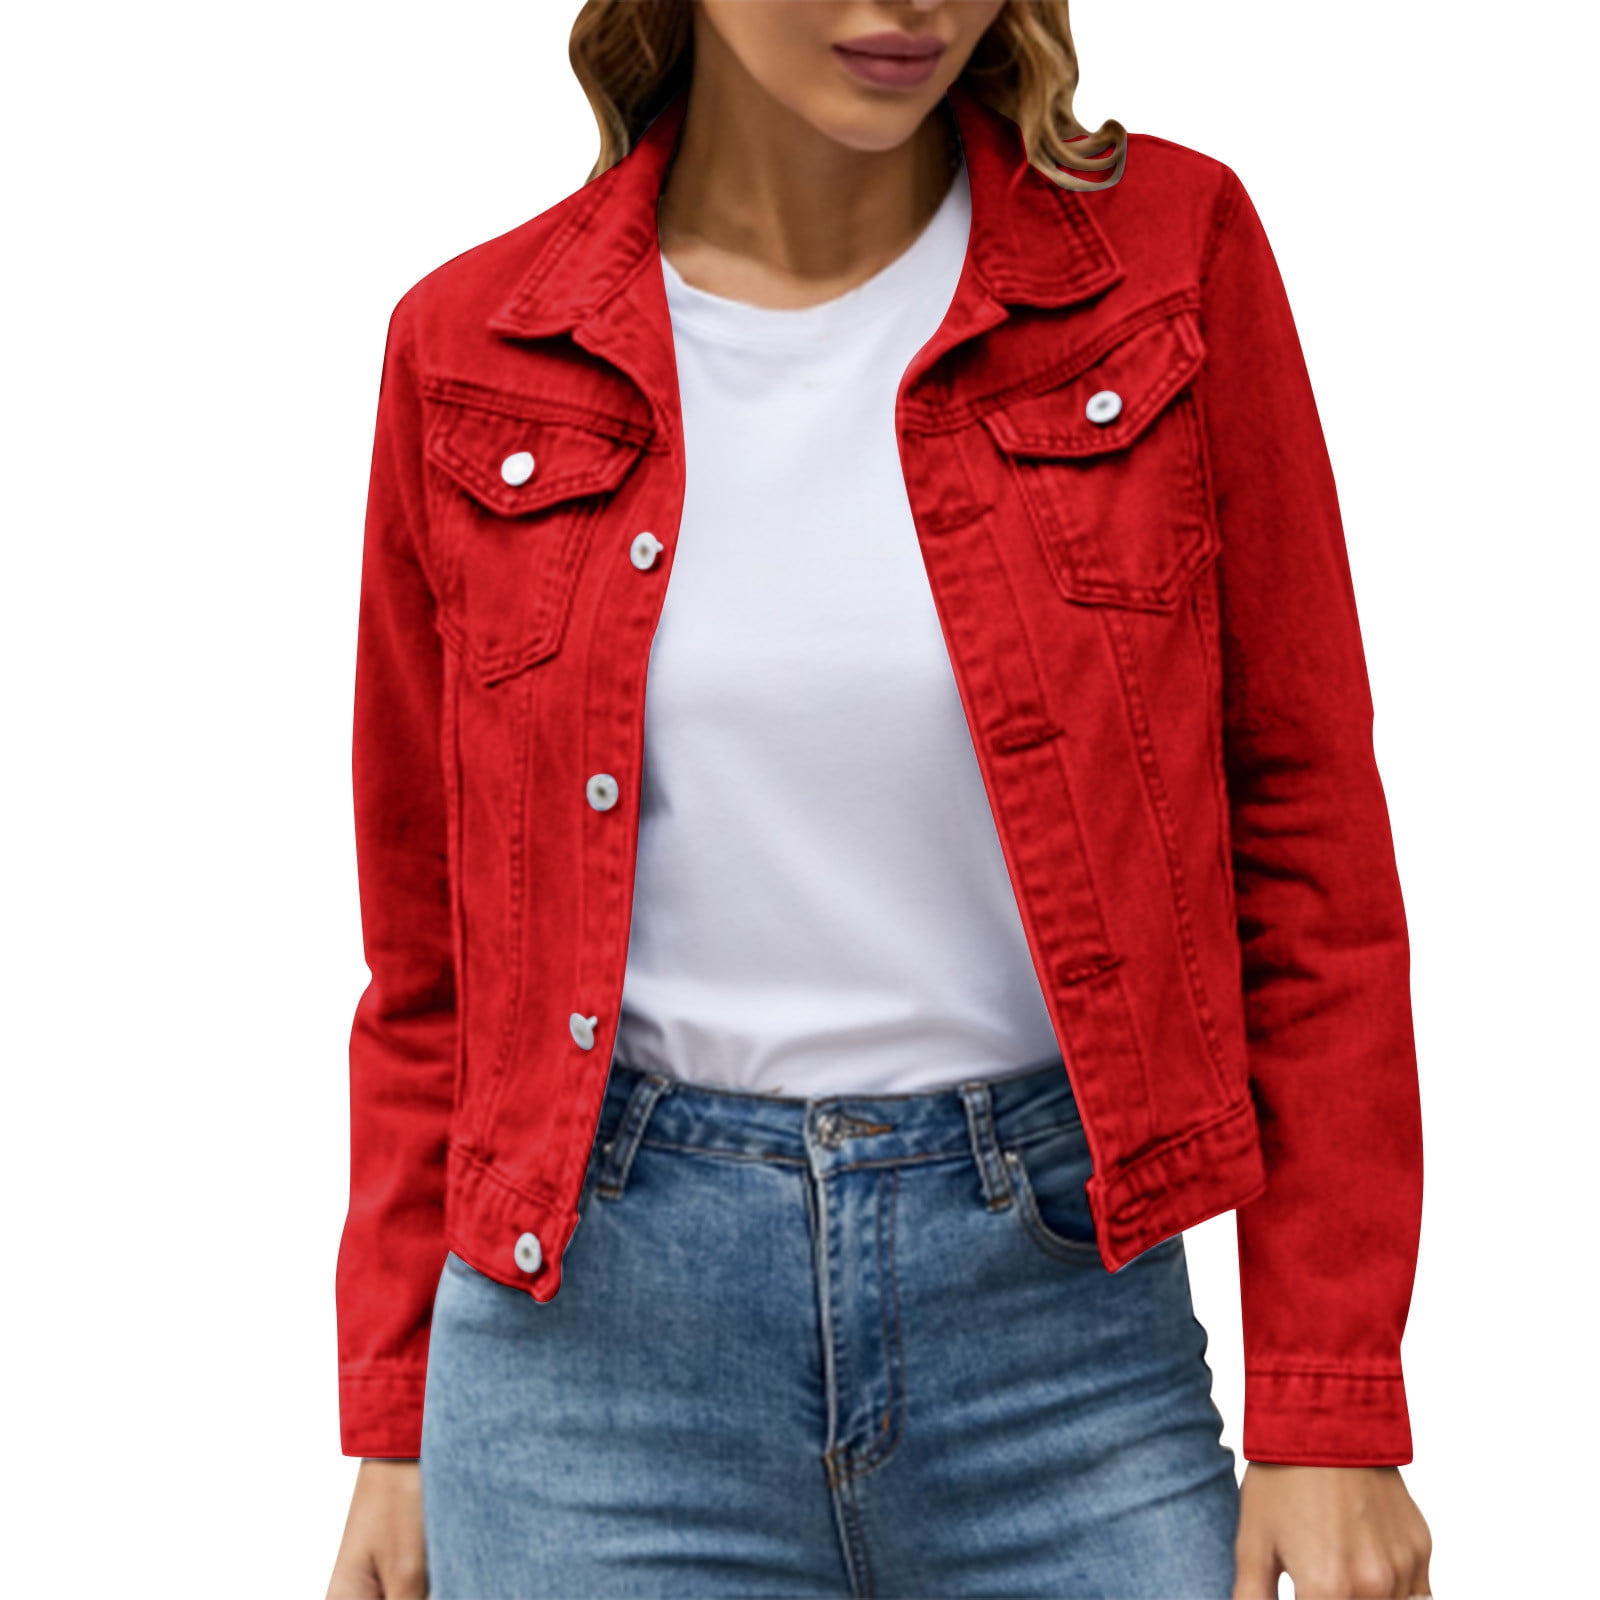 Noarlalf Denim Jacket for Women Solid Color Button Down Denim Cotton Jacket  With Pockets Women'S Denim Jackets Red Xl